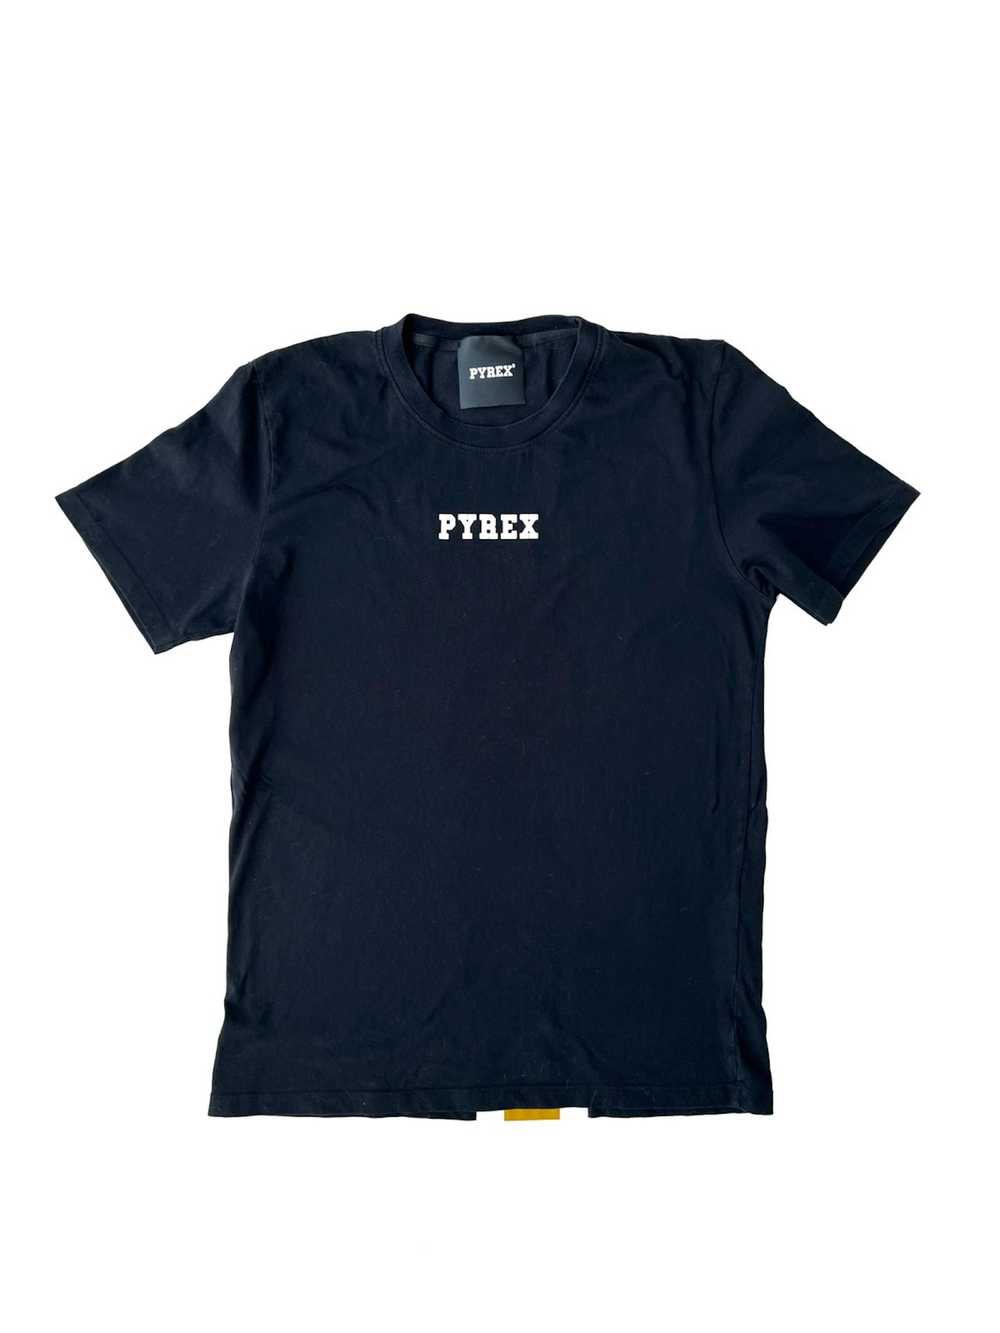 Pyrex Vision Pyrex Vision T-Shirt Big logo - image 2